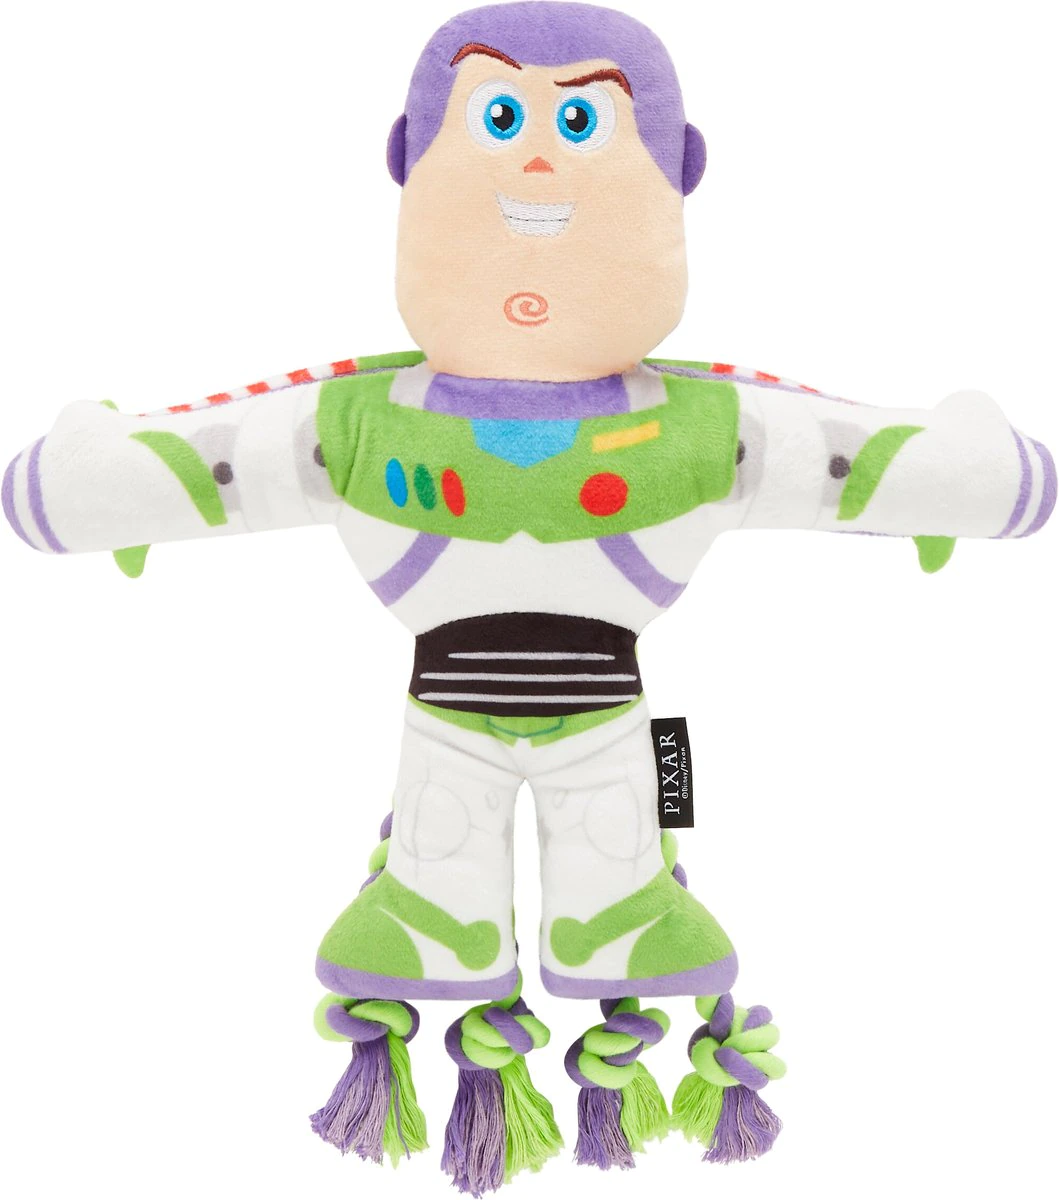 Disney Pixar Buzz Lightyear Plush with Rope Squeaky Dog Toy 巴斯光年拉繩發聲玩具